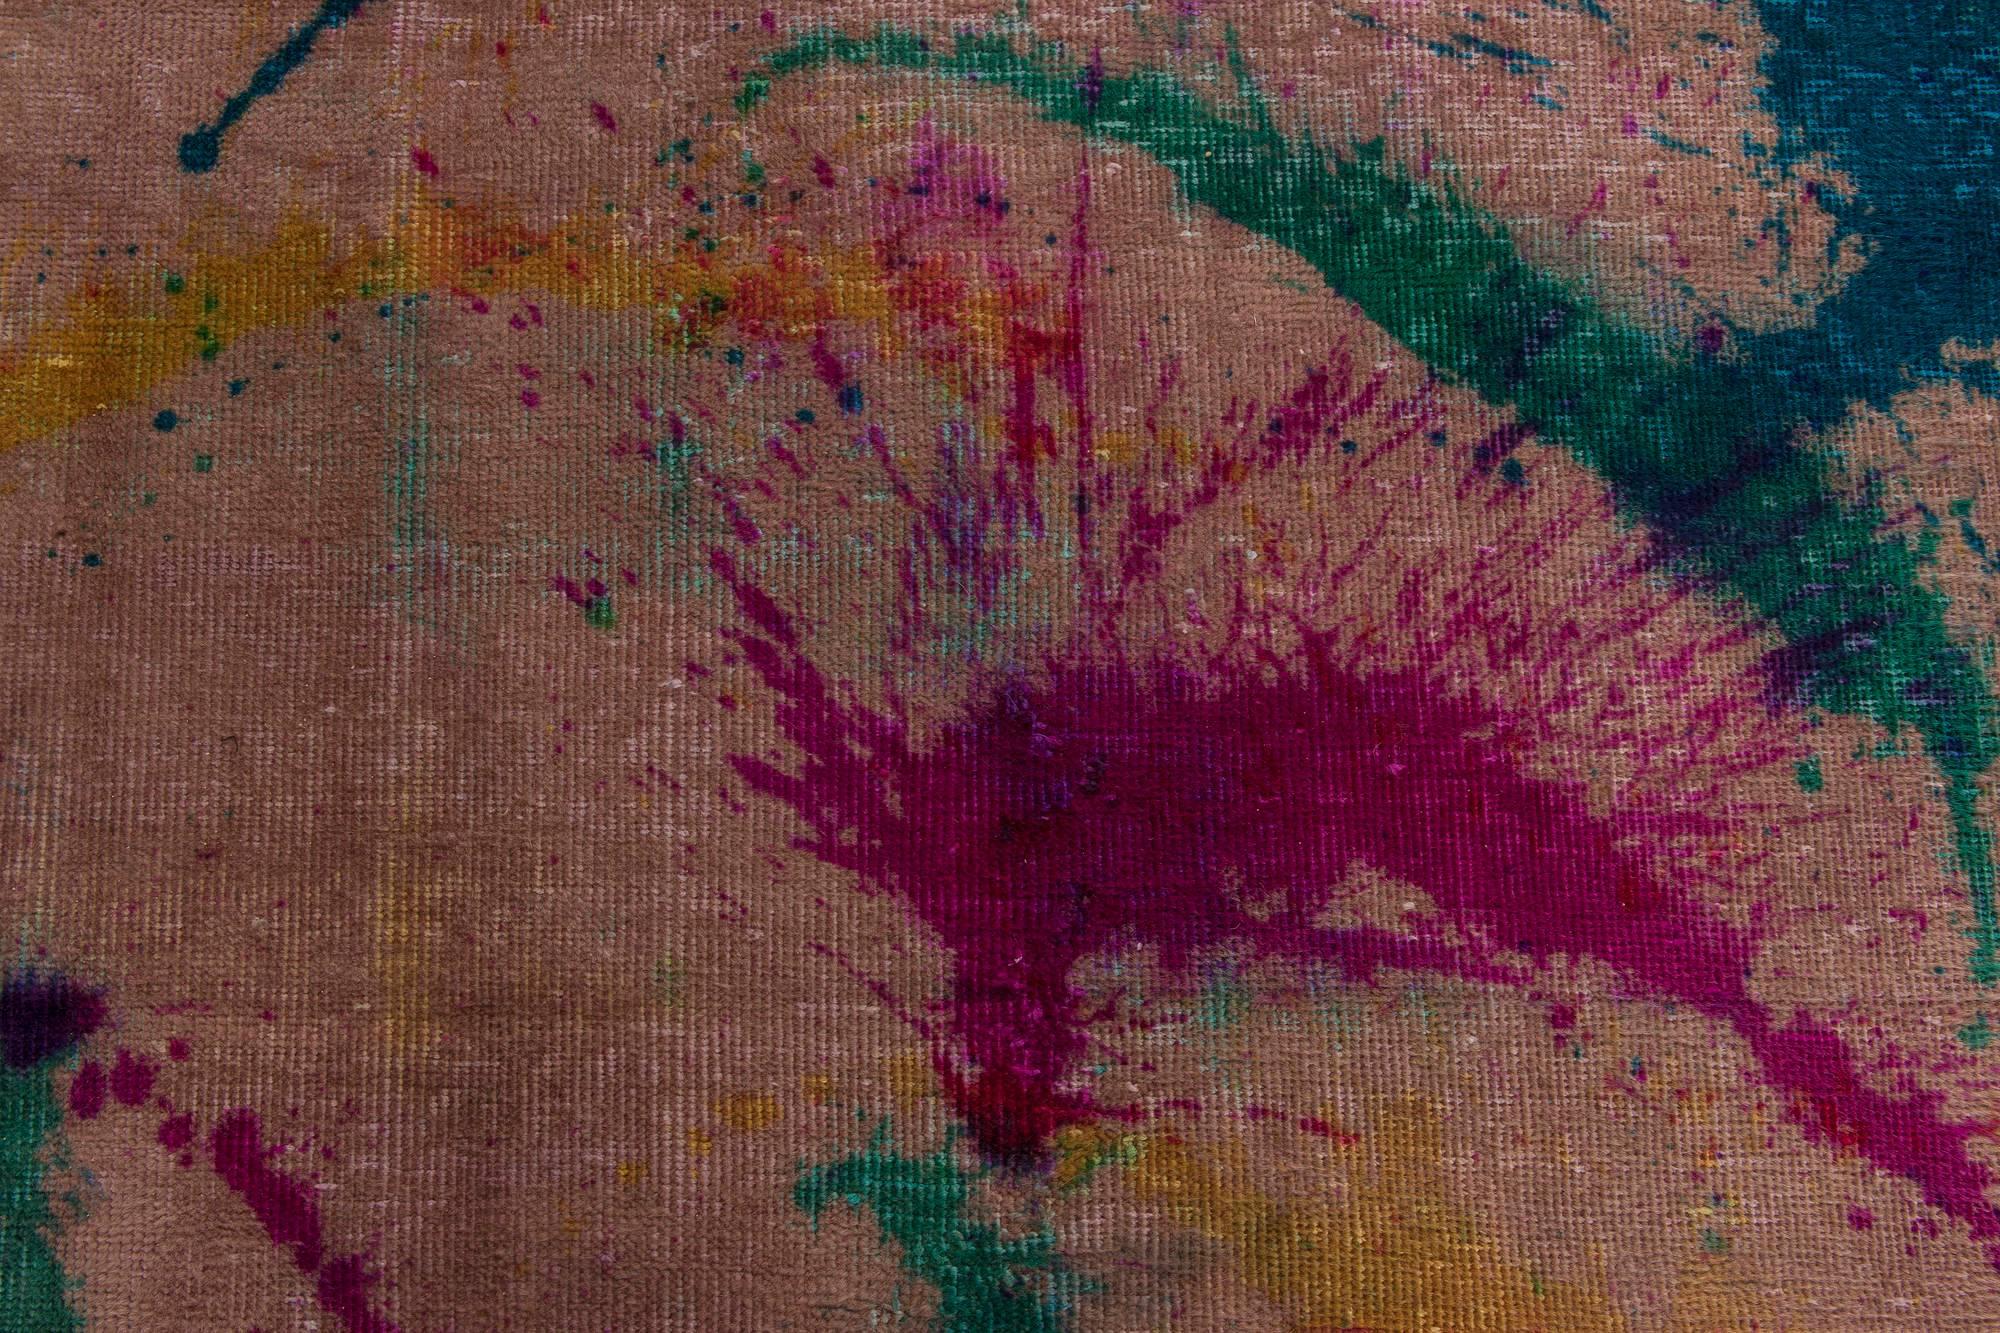 Contemporary abstract Daliesque handmade wool rug by Doris Leslie Blau
Size: 6'4